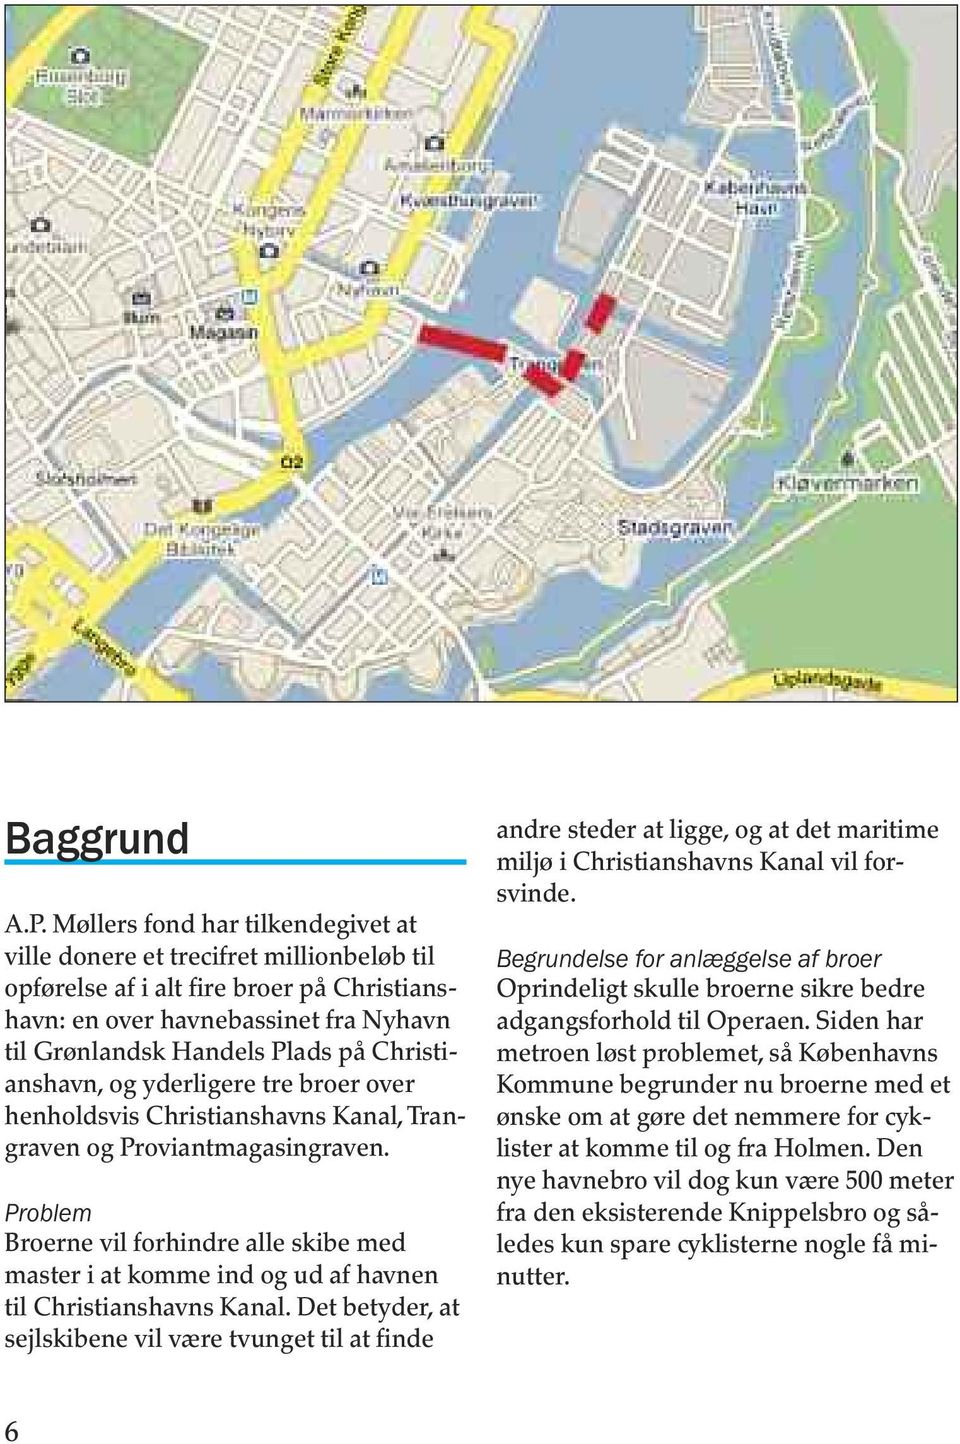 Christianshavn, og yderligere tre broer over henholdsvis Christianshavns Kanal, Trangraven og Proviantmagasingraven.